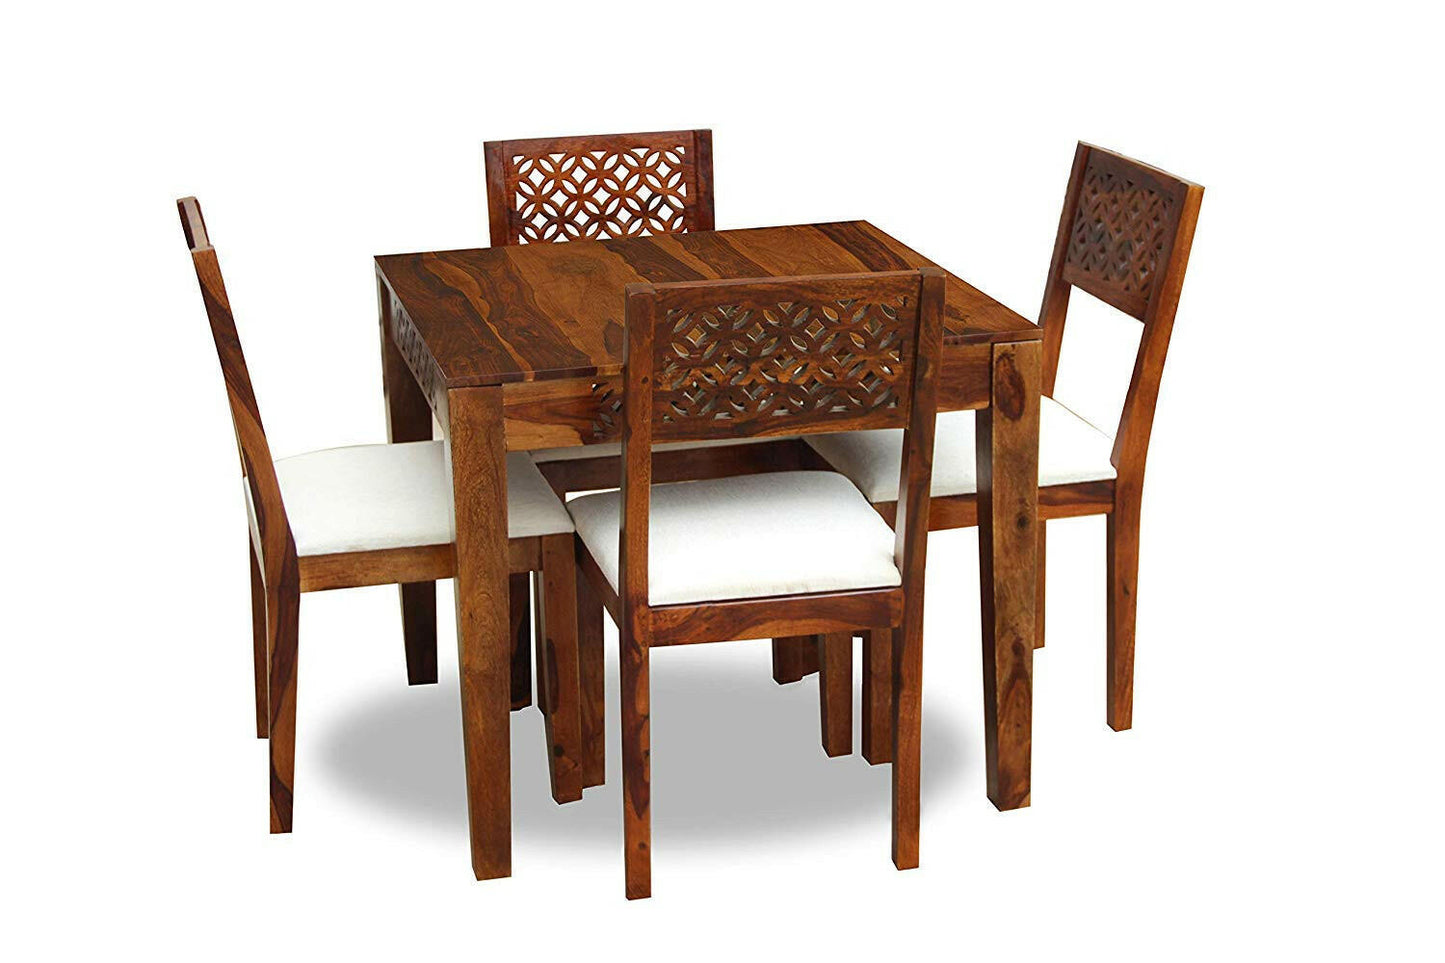 dining set, designer dining table set , six seater dining table sets,  four seater dining table sets, wooden dining table sets, modern dining table, live edge dining table, dining table sets Bangalore